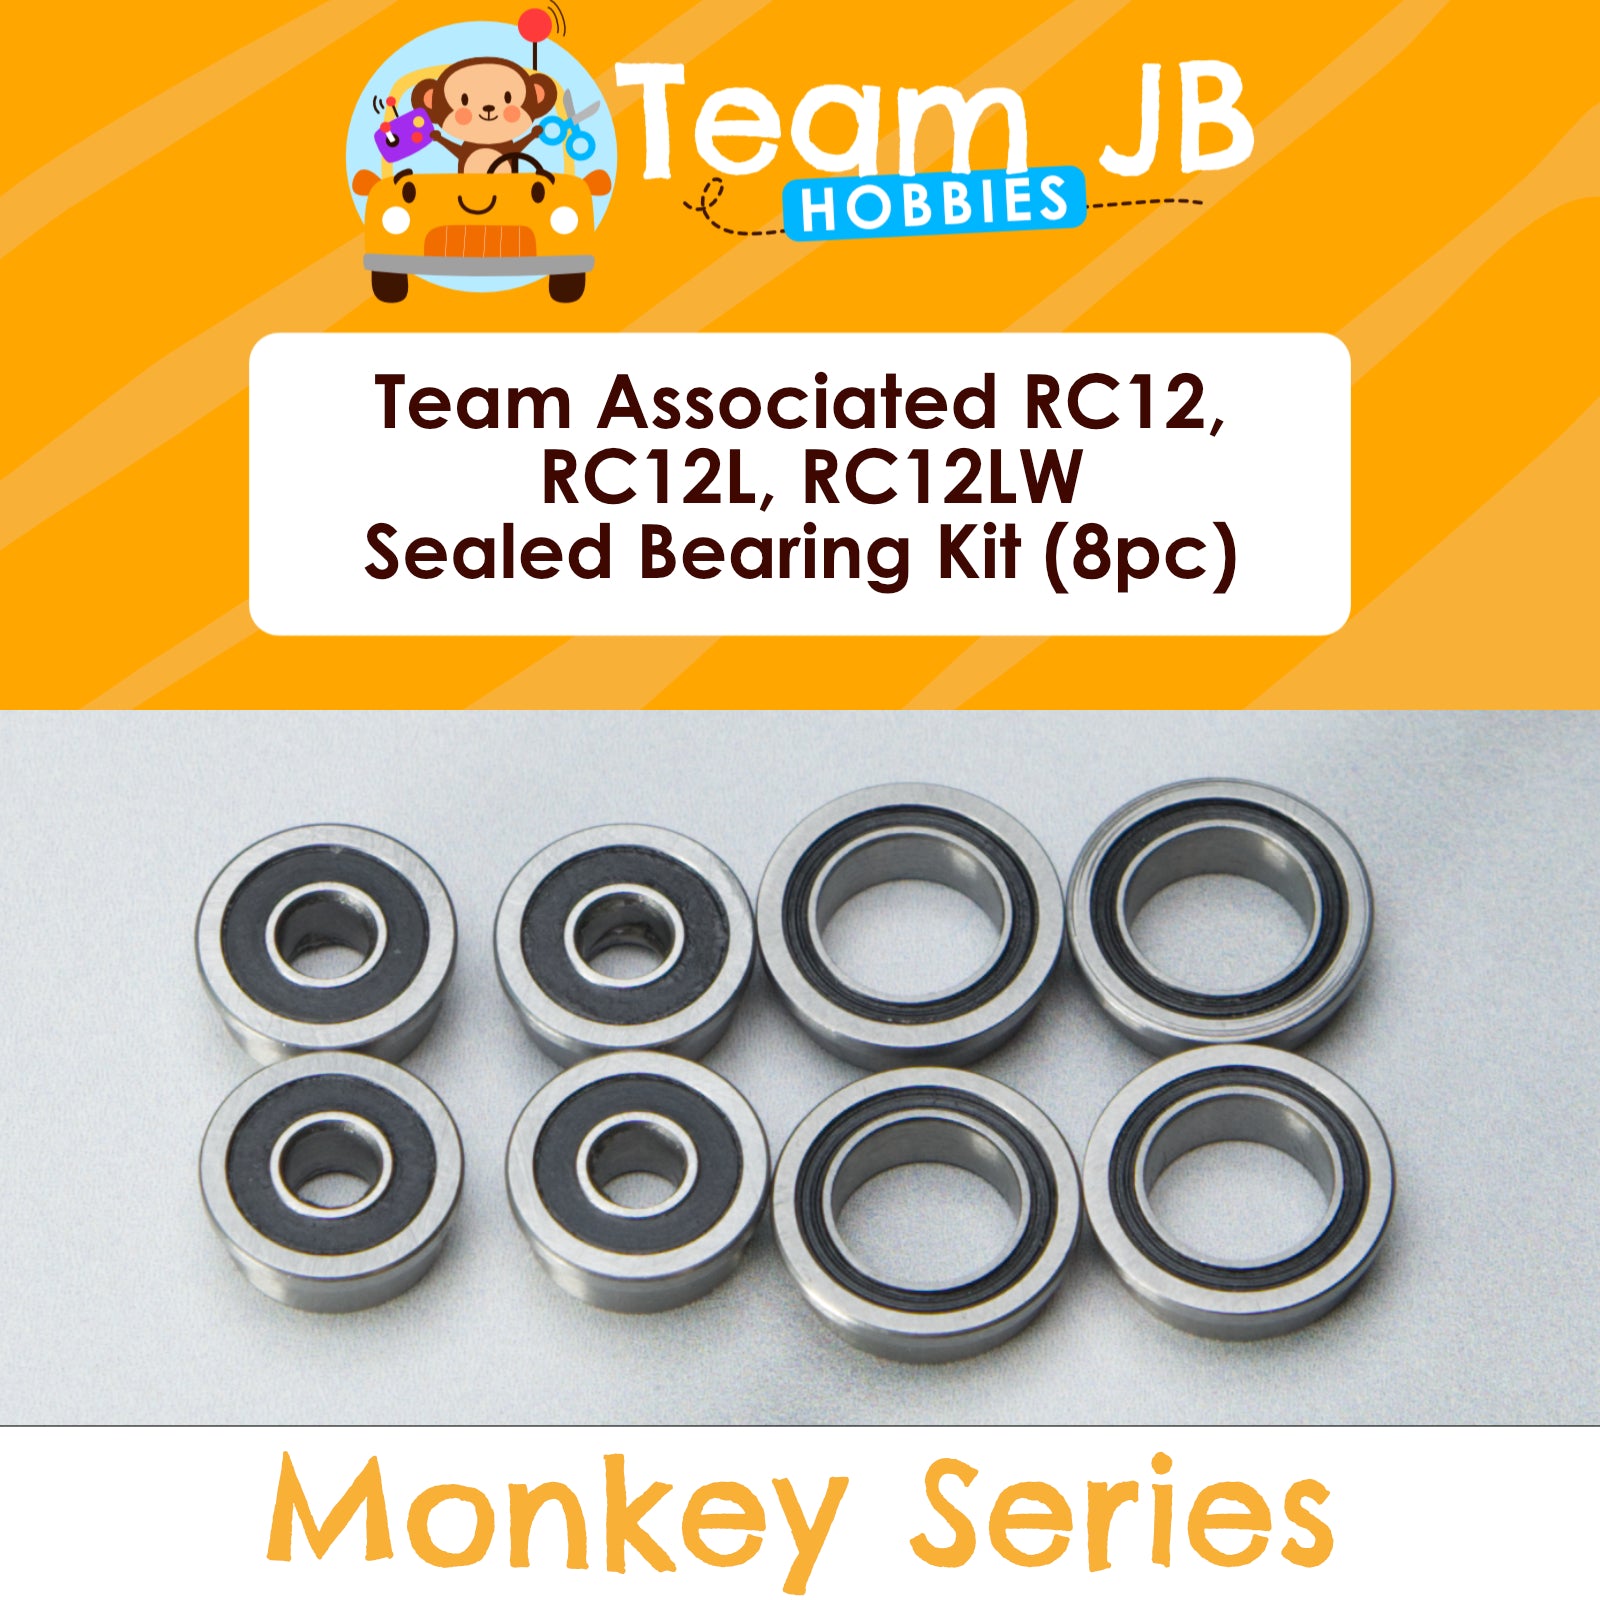 Team Associated RC12, RC12L, RC12LW - Sealed Bearing Kit